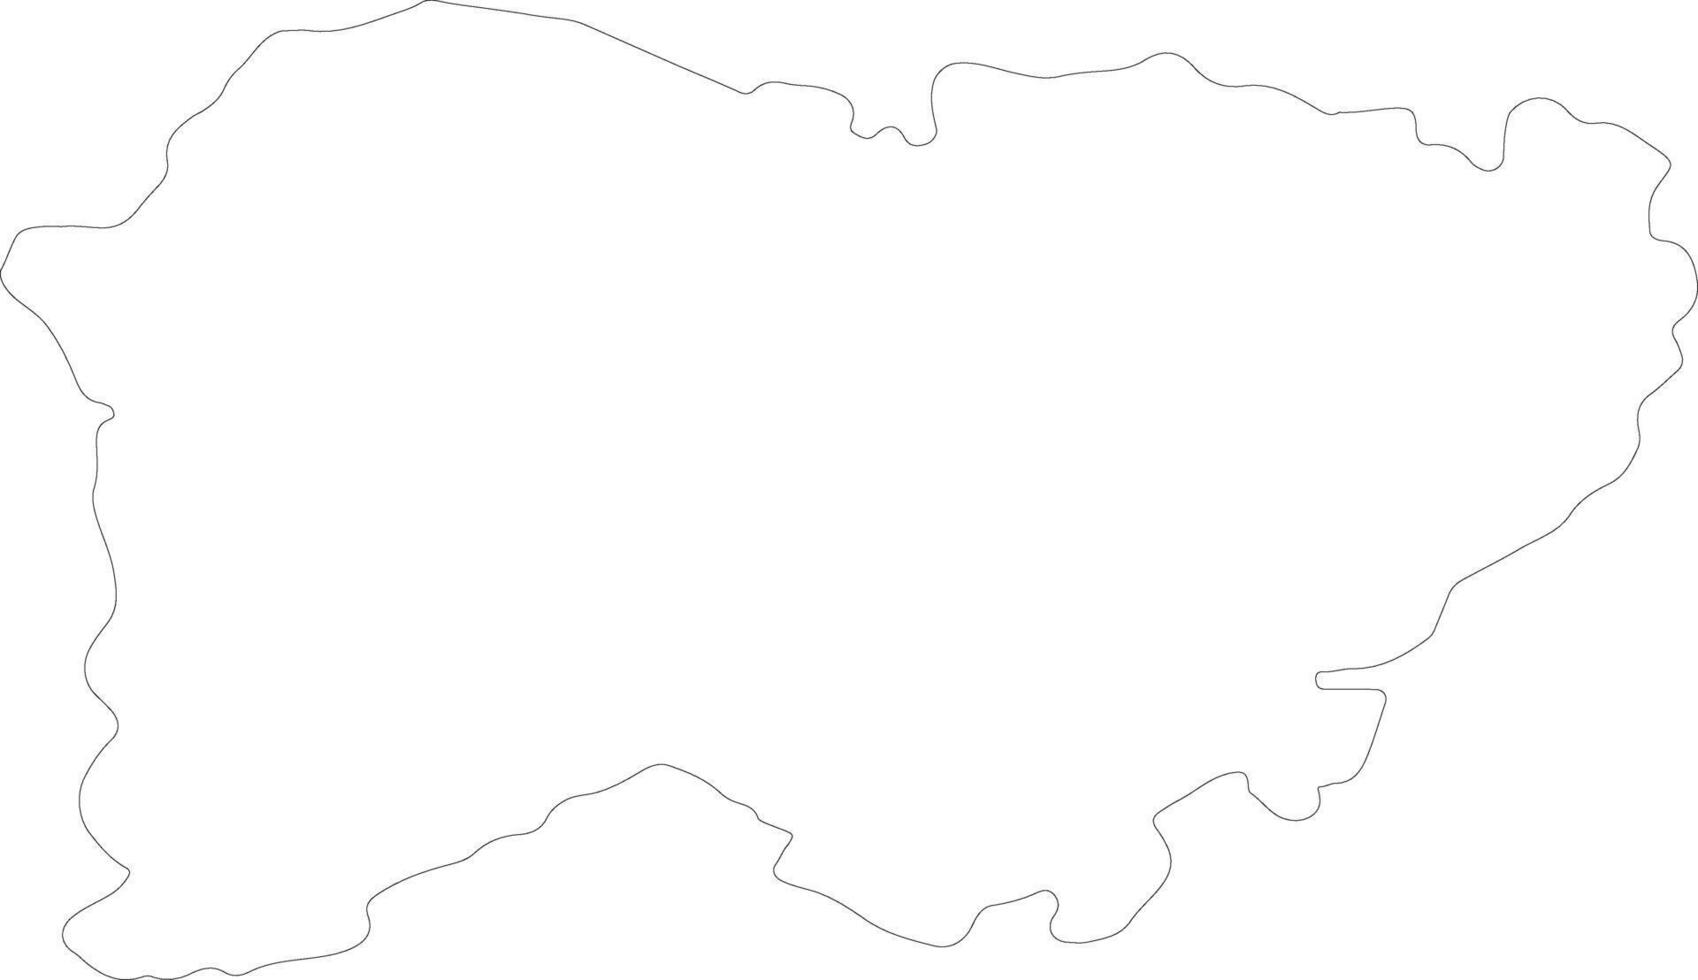 salamanca Spagna schema carta geografica vettore